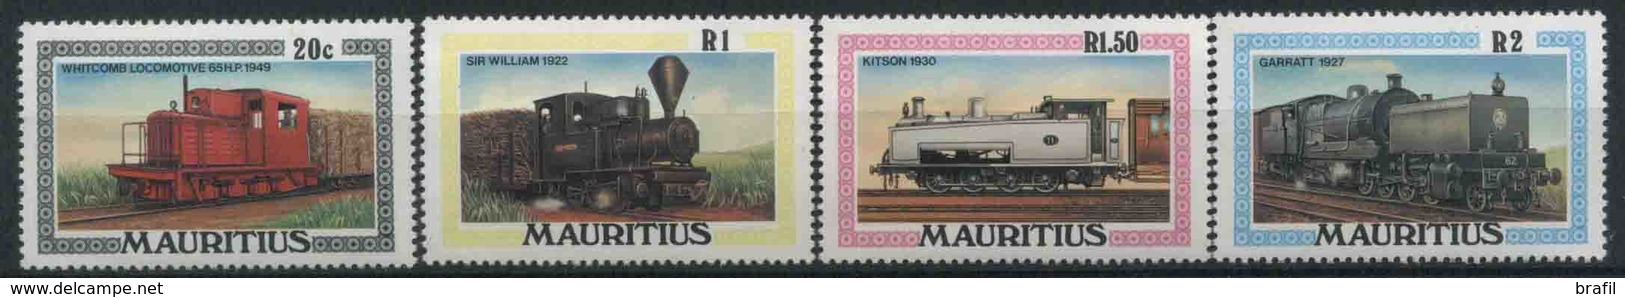 1979 Mauritius, Treni Di Mauritius, Serie Completa Nuova (**) - Mauritius (1968-...)